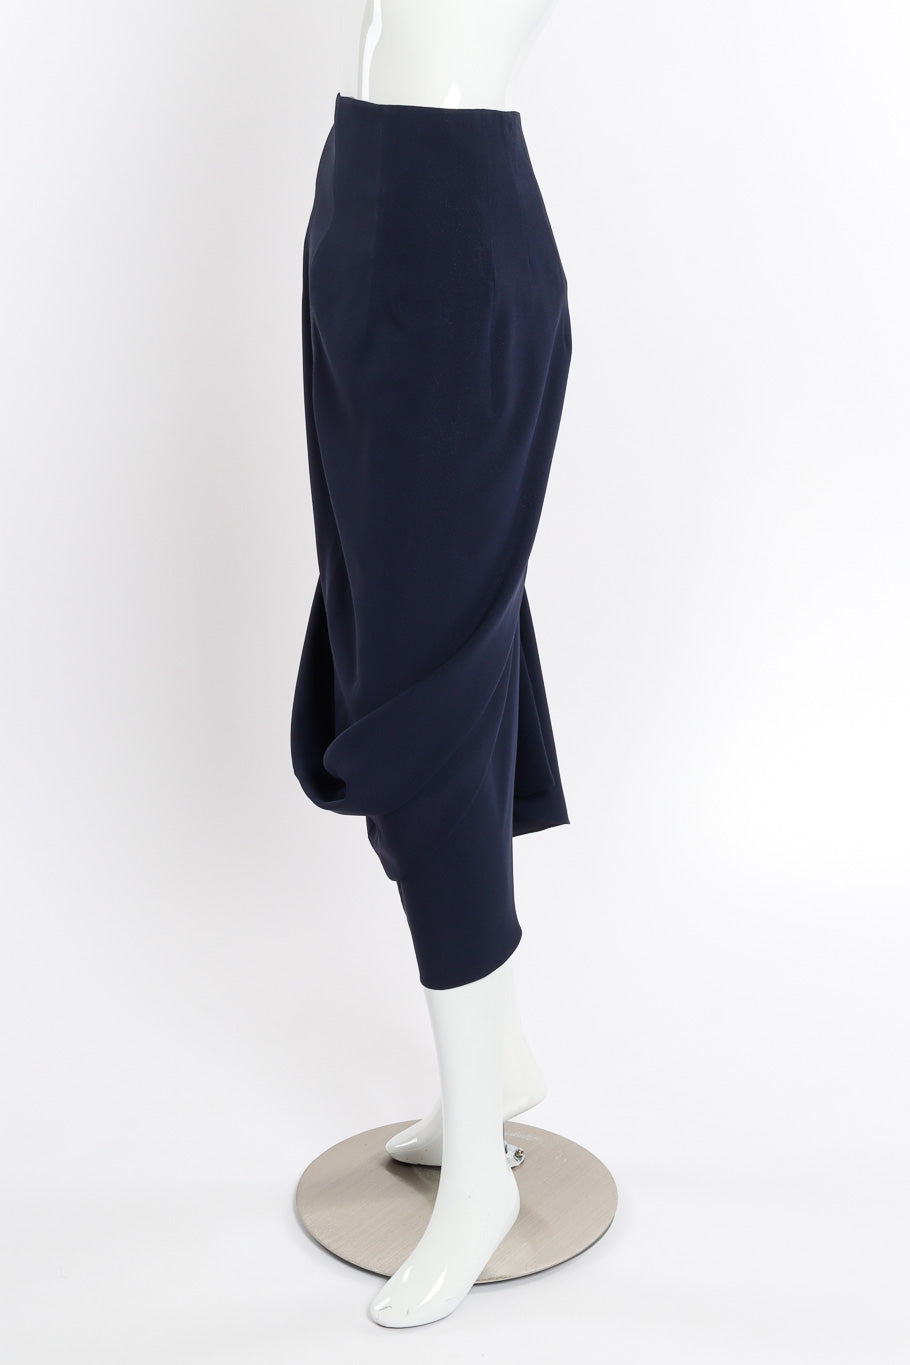 Vintage John Galliano 1999 S/S Draped Jacket and Skirt Set skirt side view on mannequin @recessla